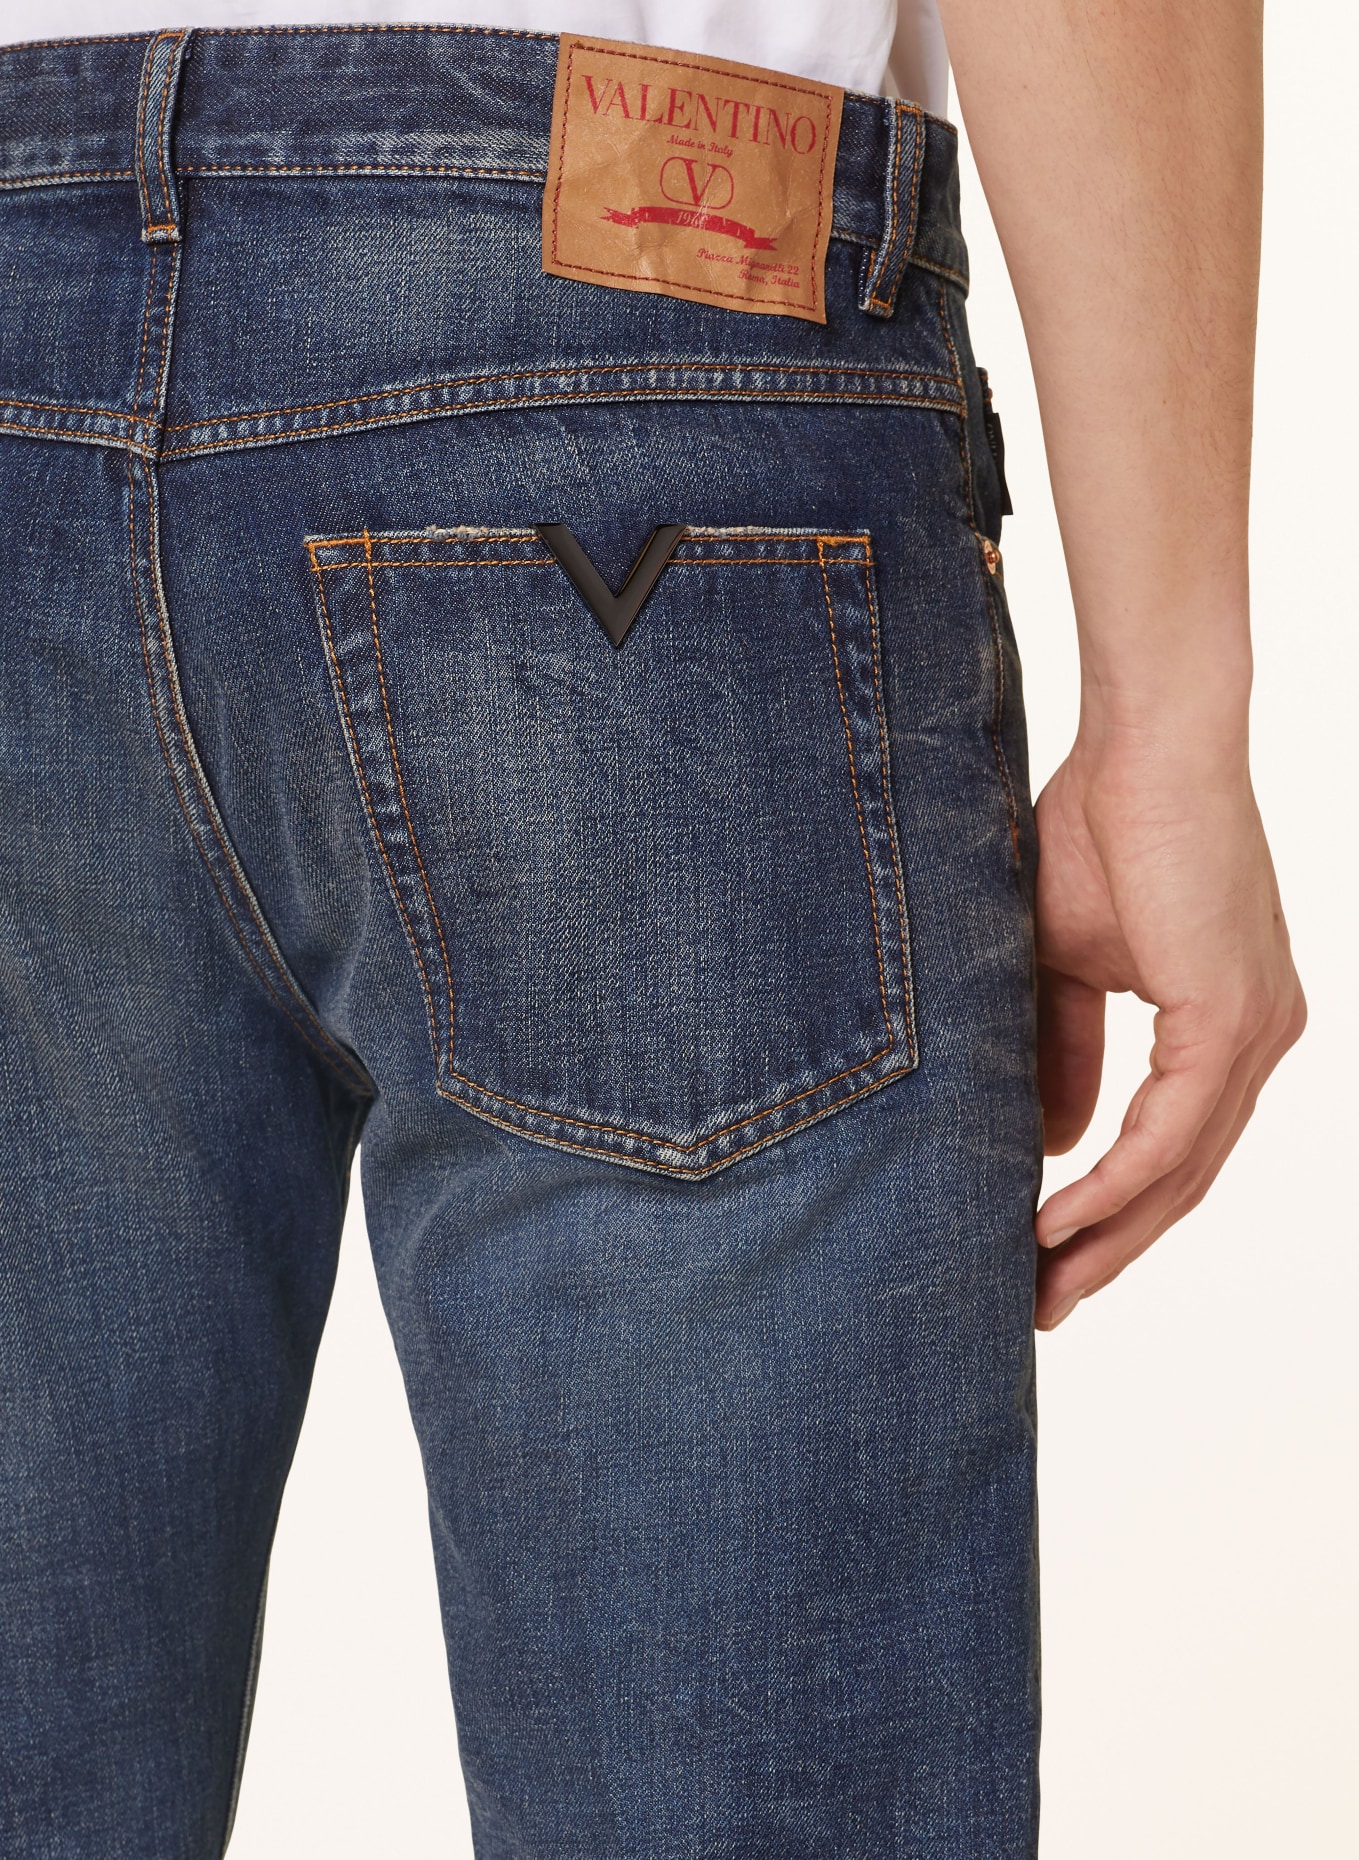 VALENTINO Jeans Extra Slim Fit, Farbe: 528 DENIM SCURO (Bild 6)